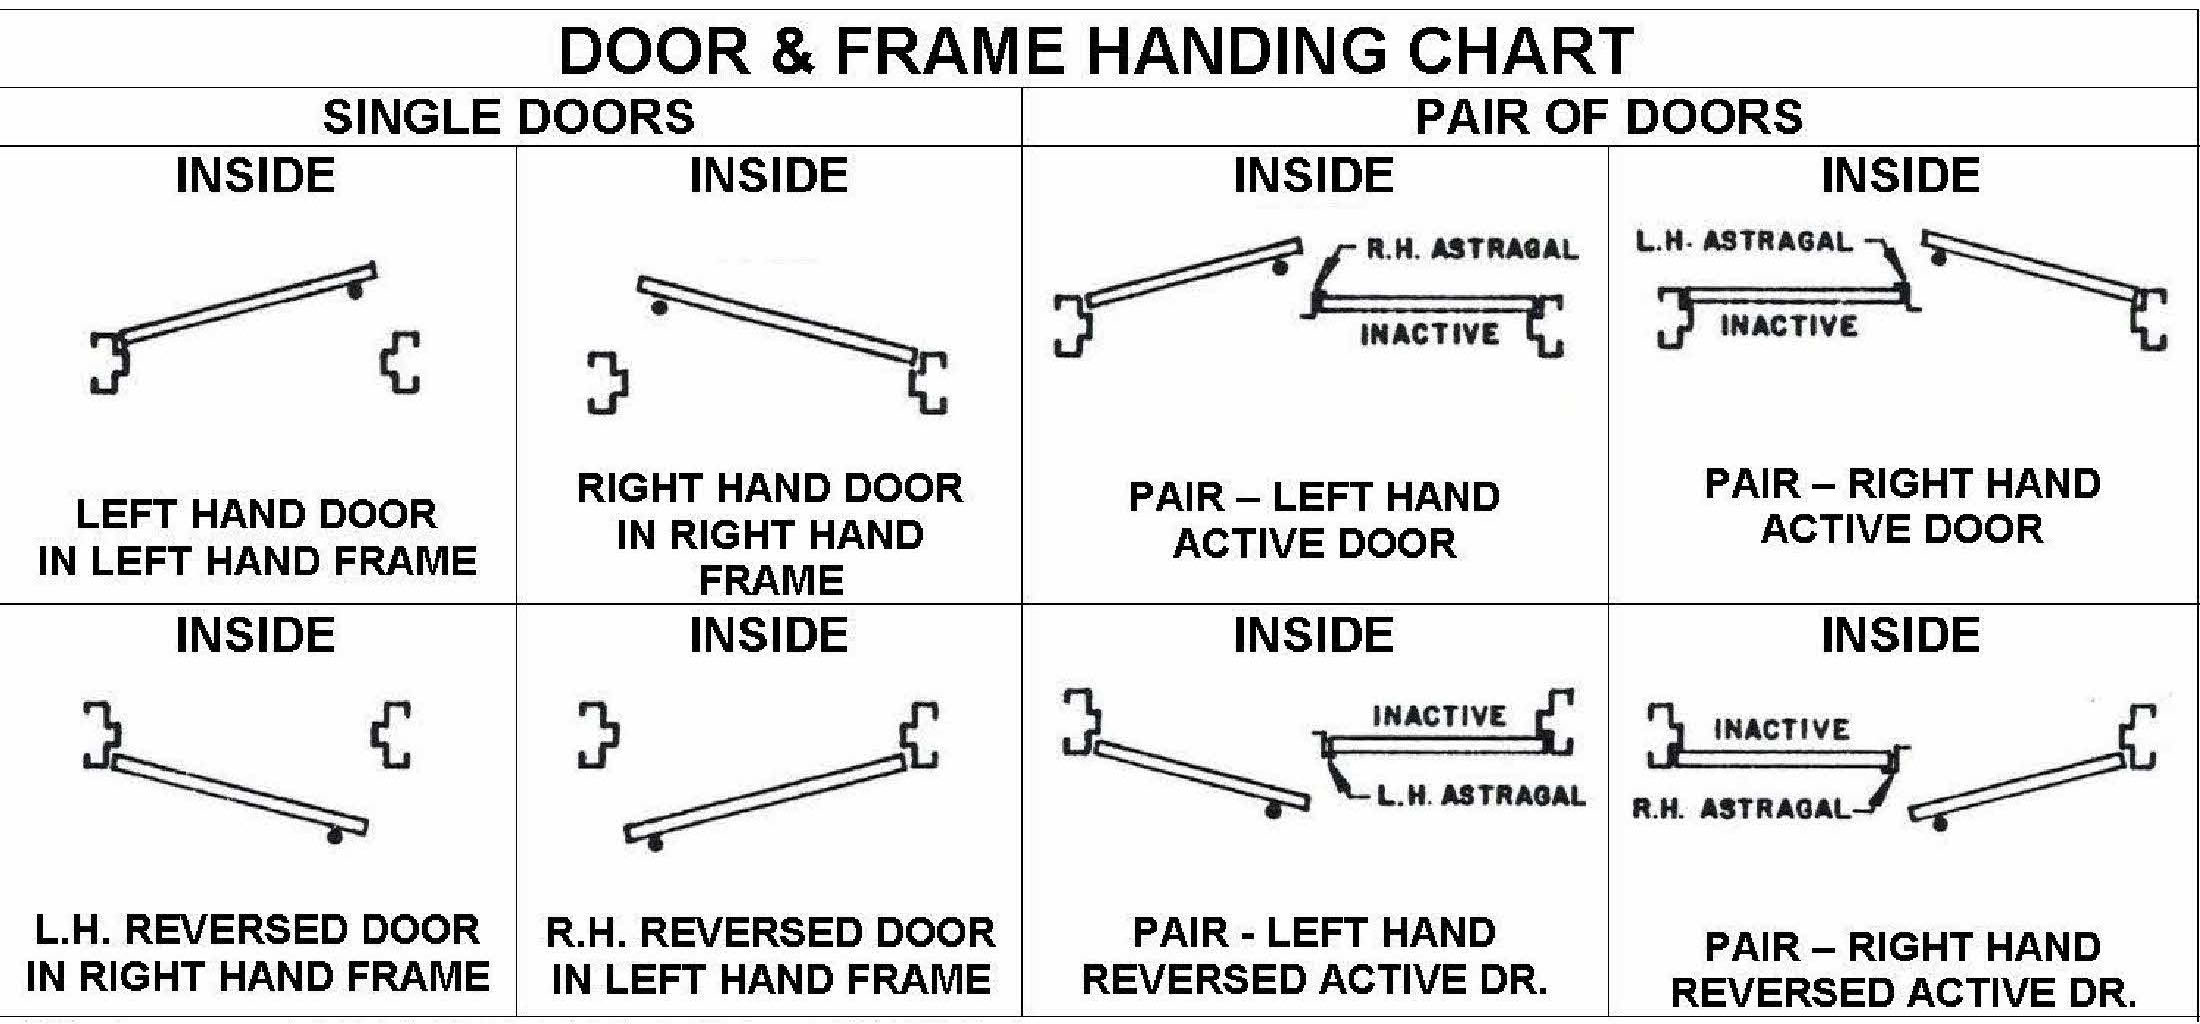 Let’s talk about door swing Ferrell Hardware